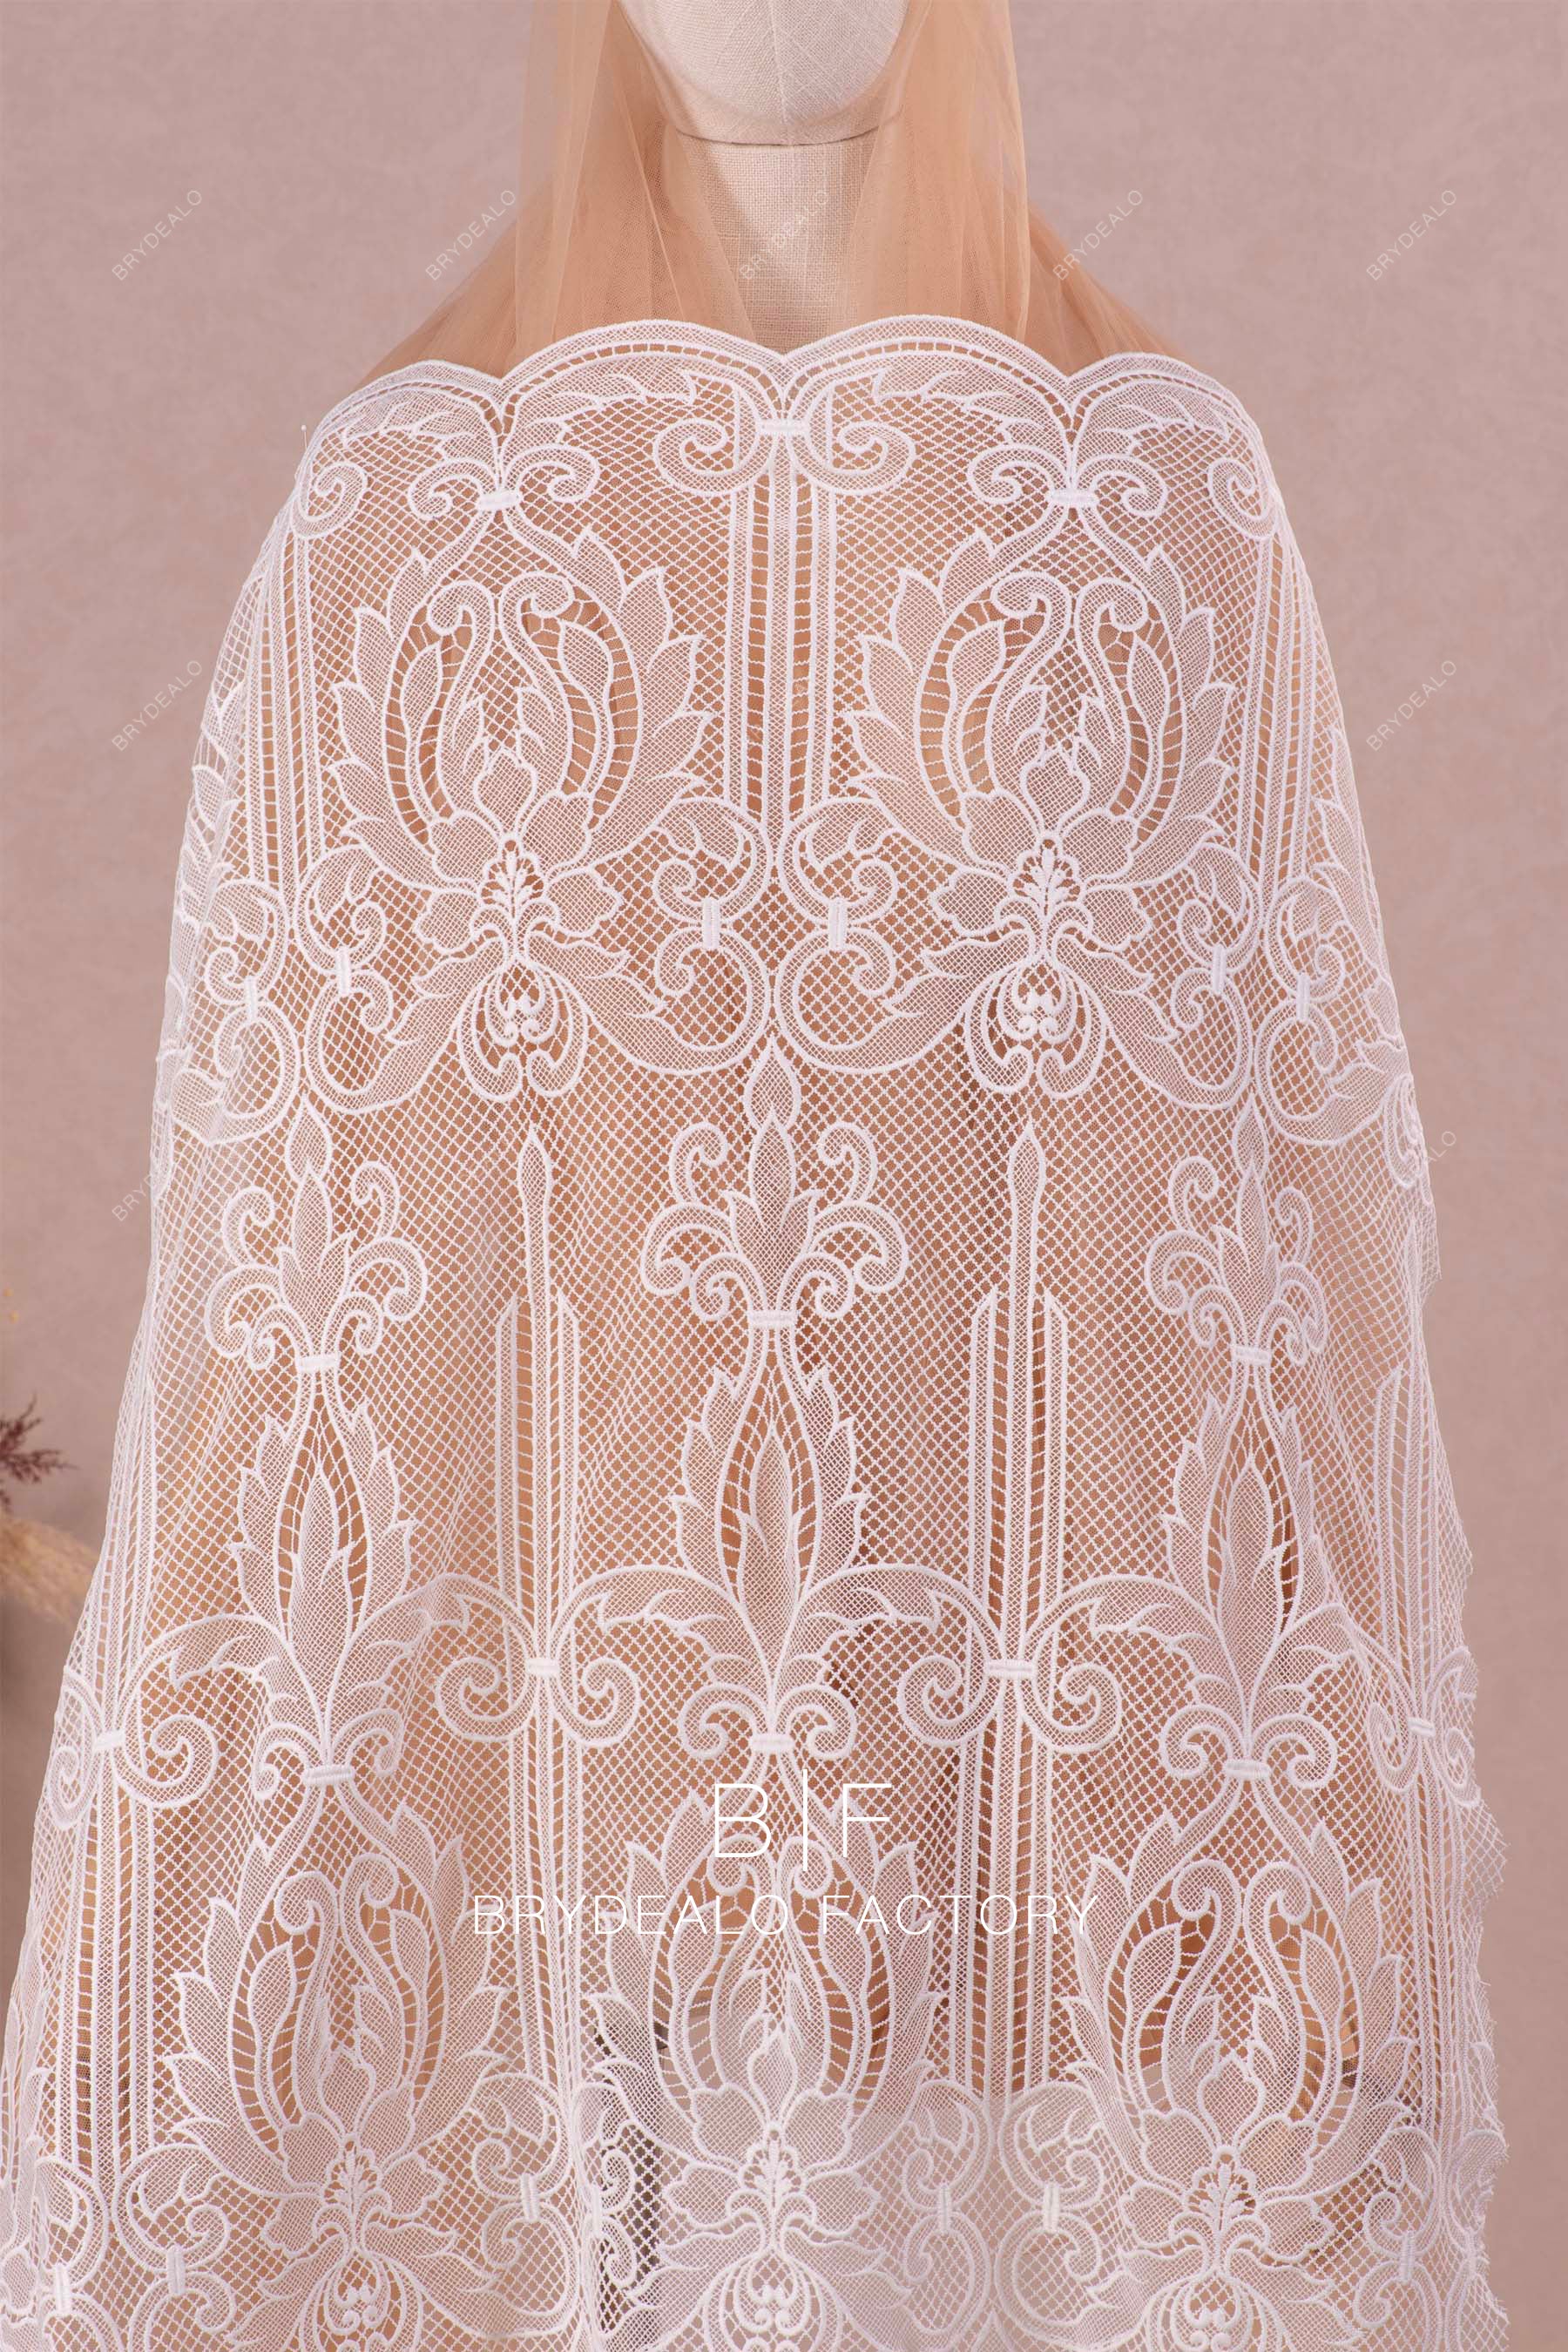 Glamorous Symmetrical Corded Lace Fabric